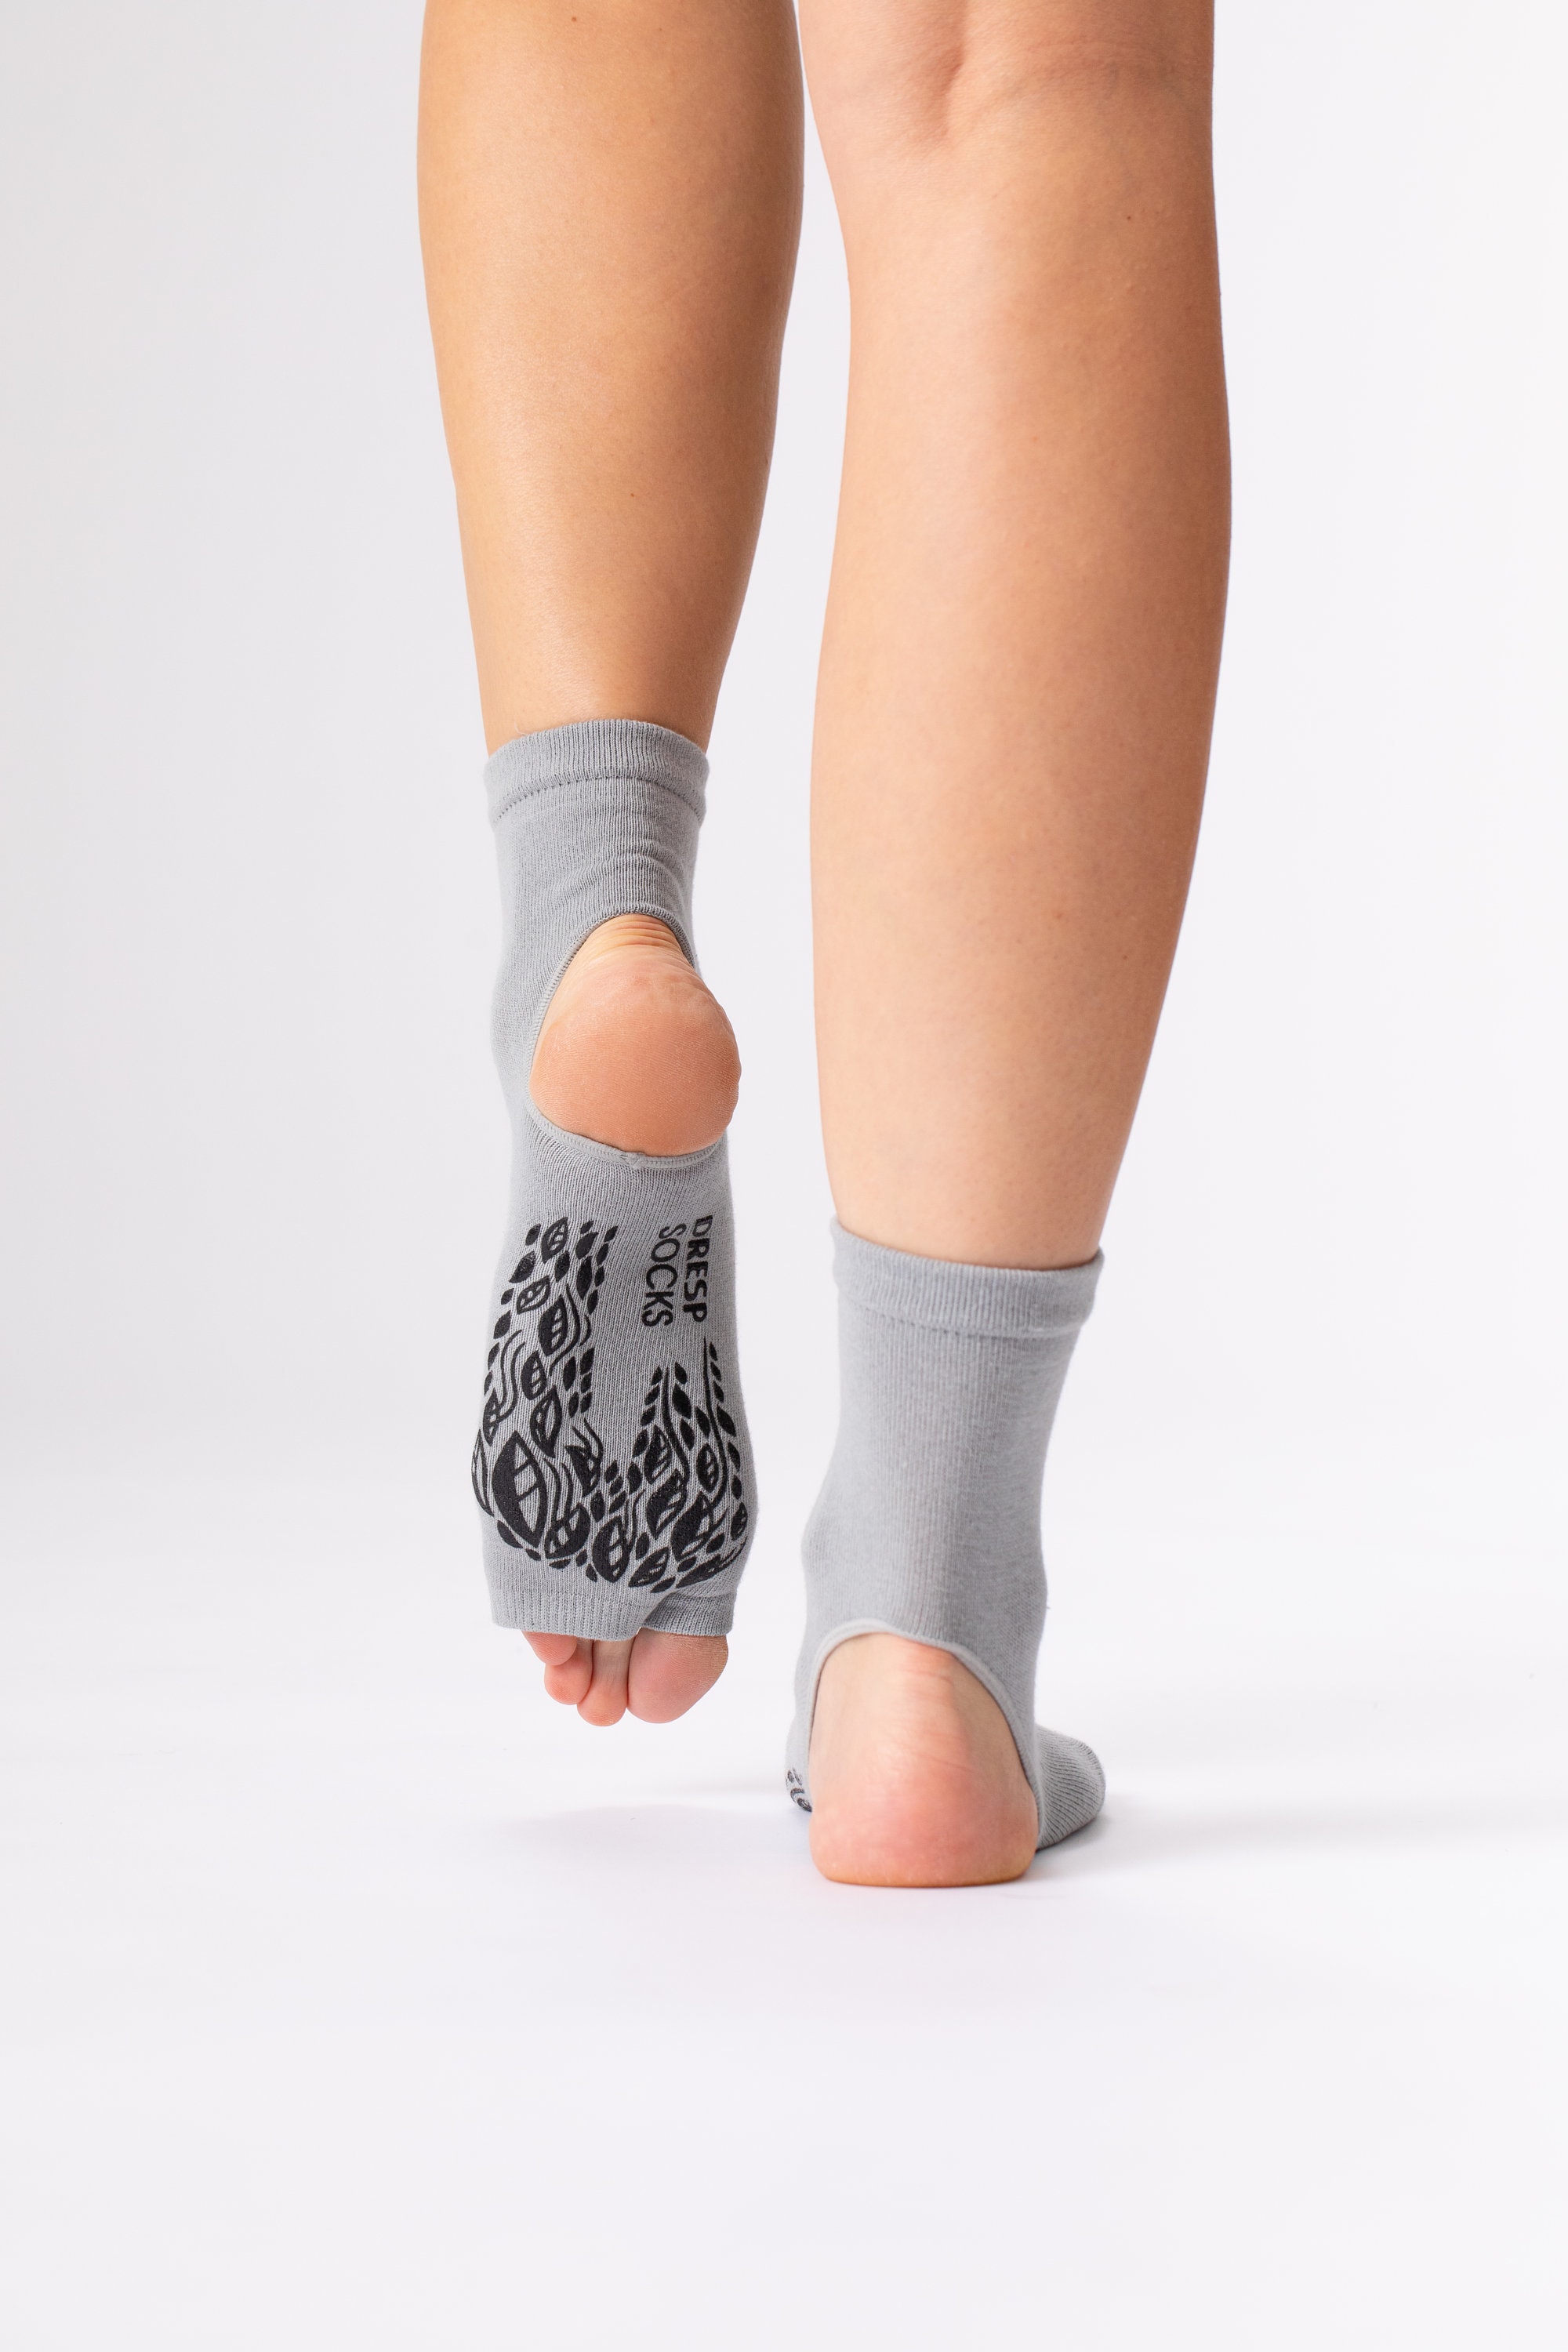 Yoga Socks – Relaxus Professional